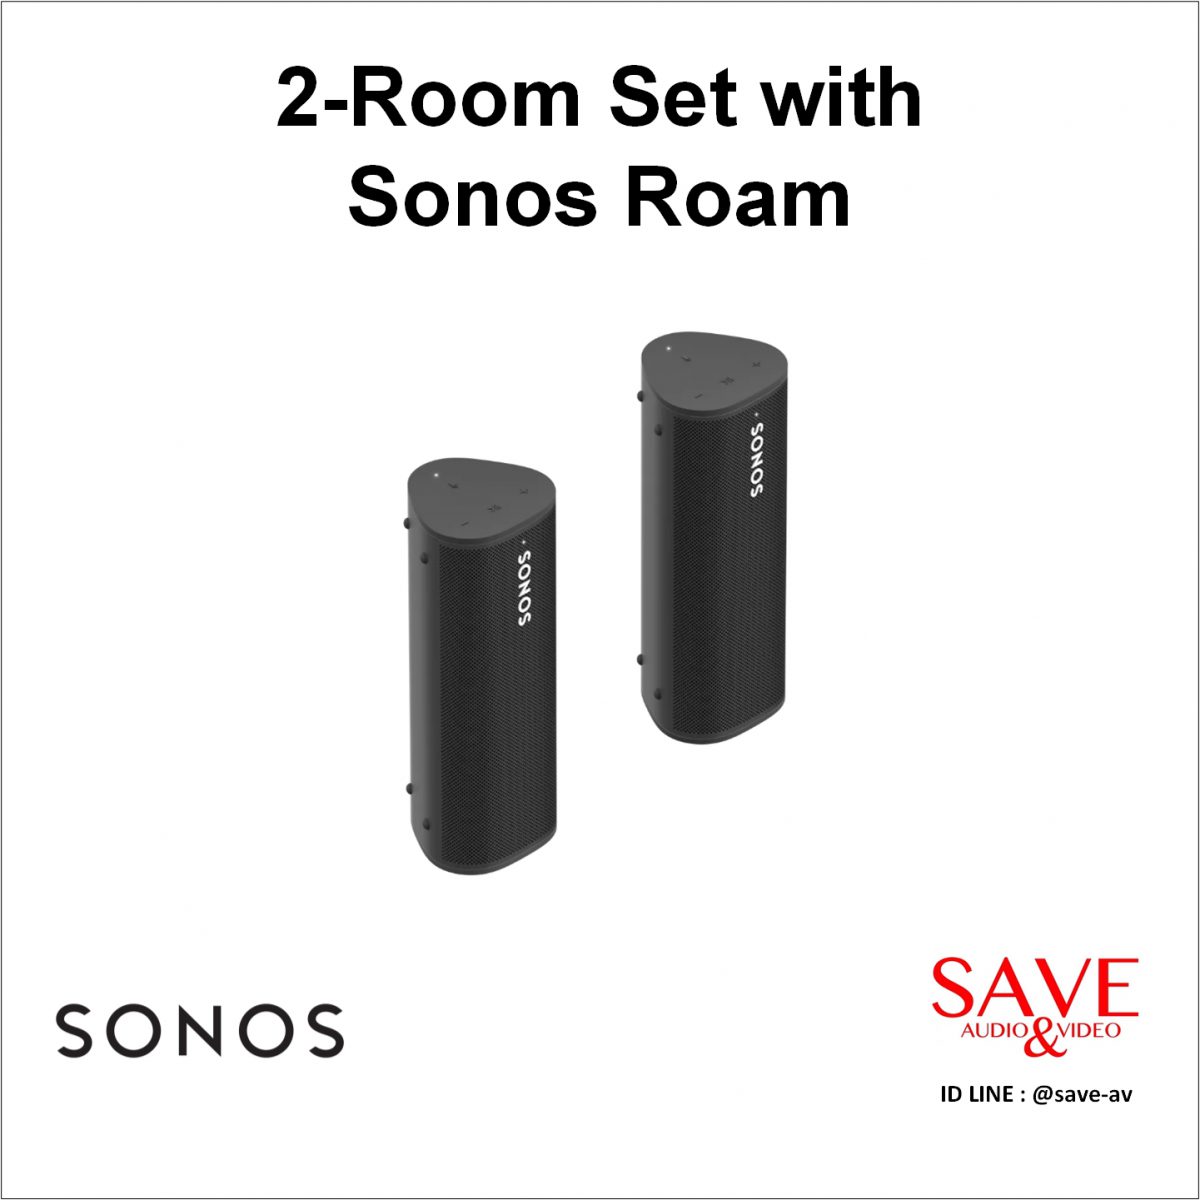 Sonos Thailand 2-Room Set with Sonos Roam